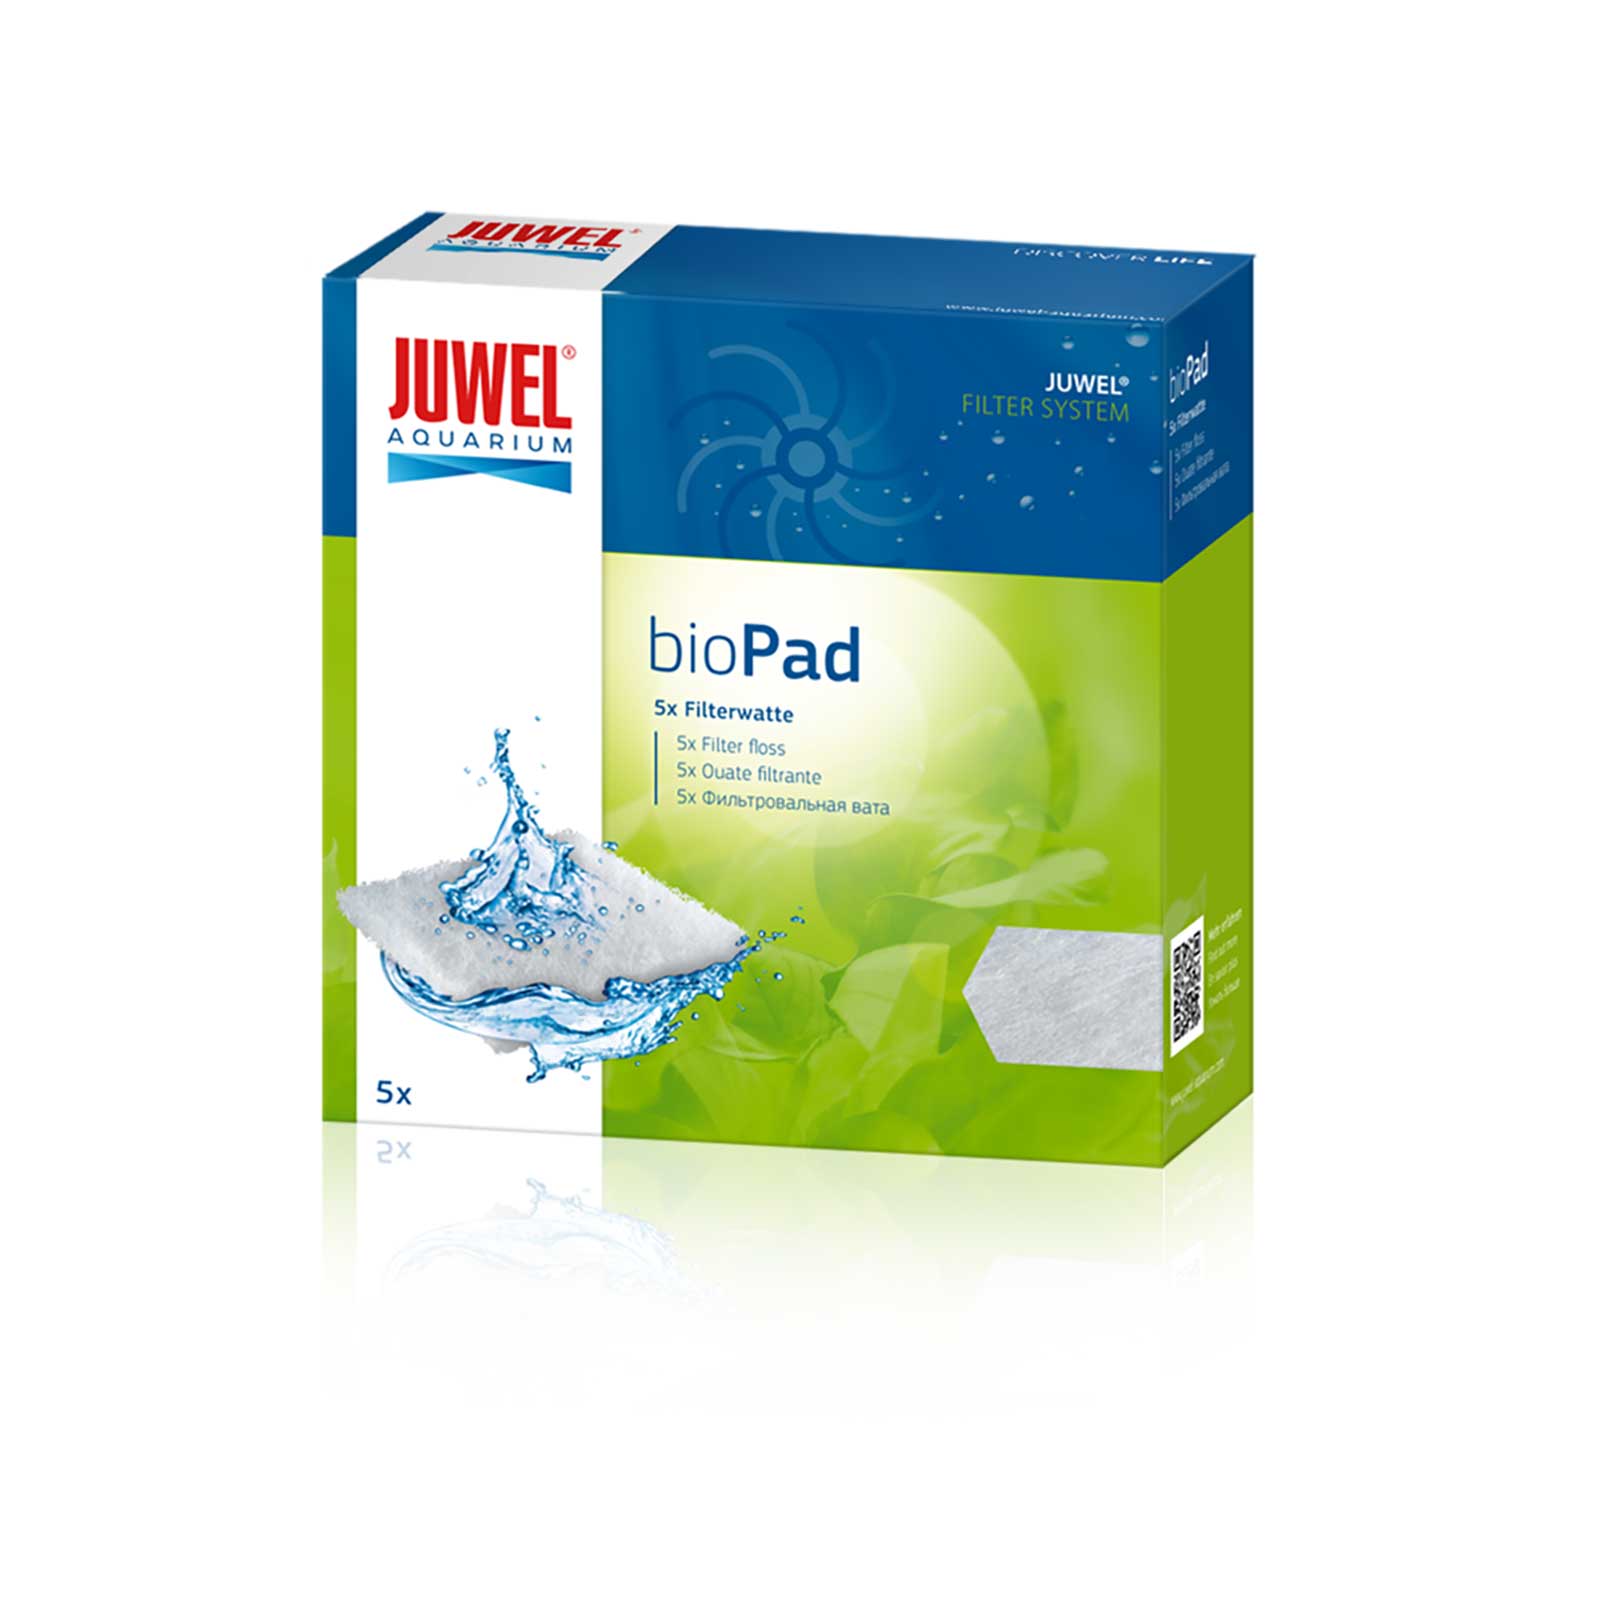 Juwel BioPad Filter Media